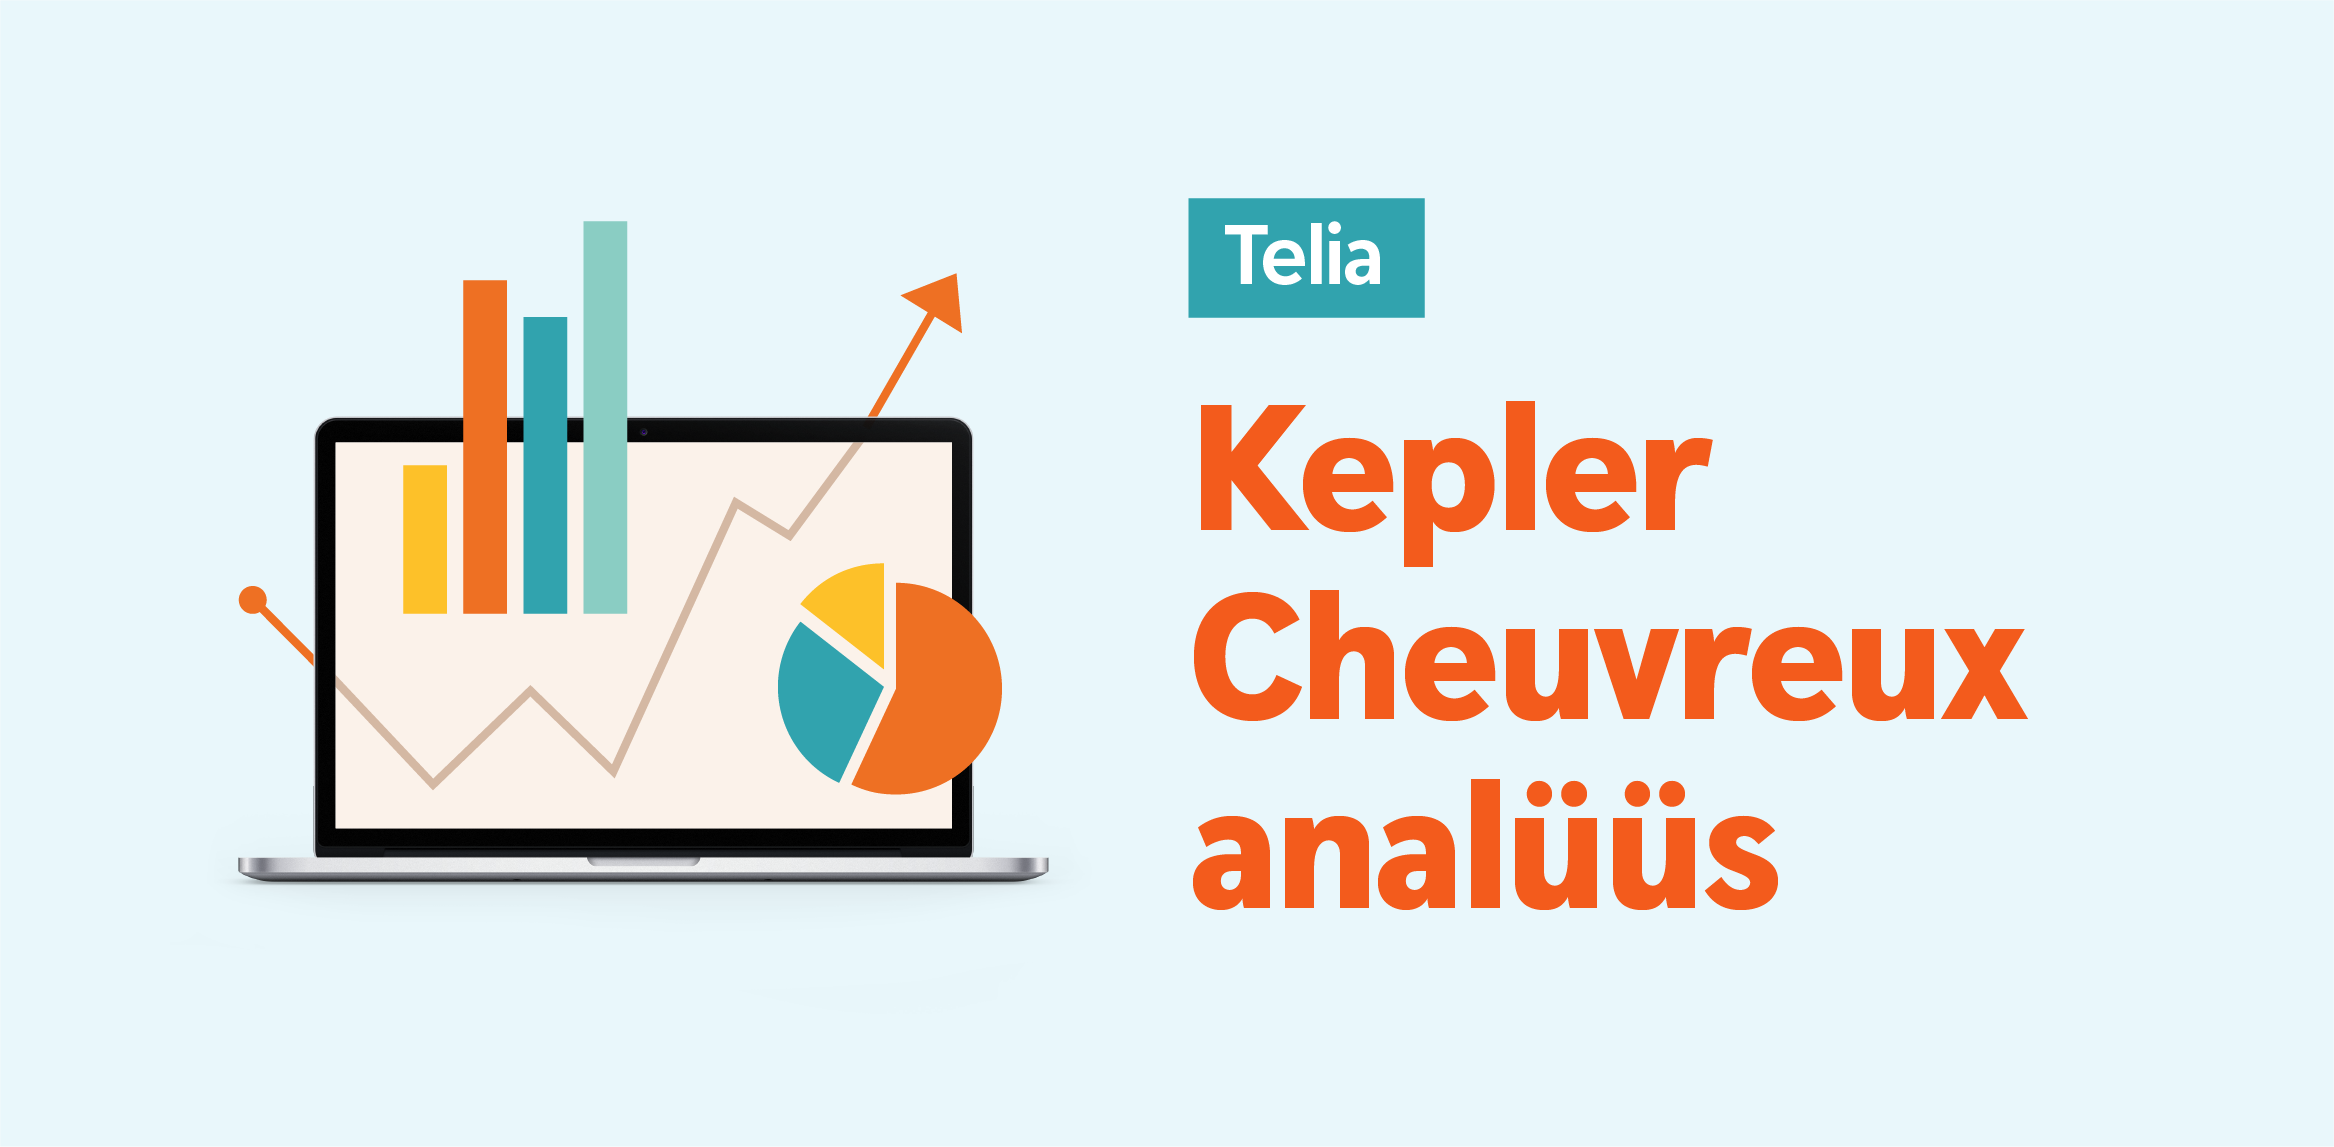 Kepler Chevureux langetas Telia aktsia hinnasihti 10%